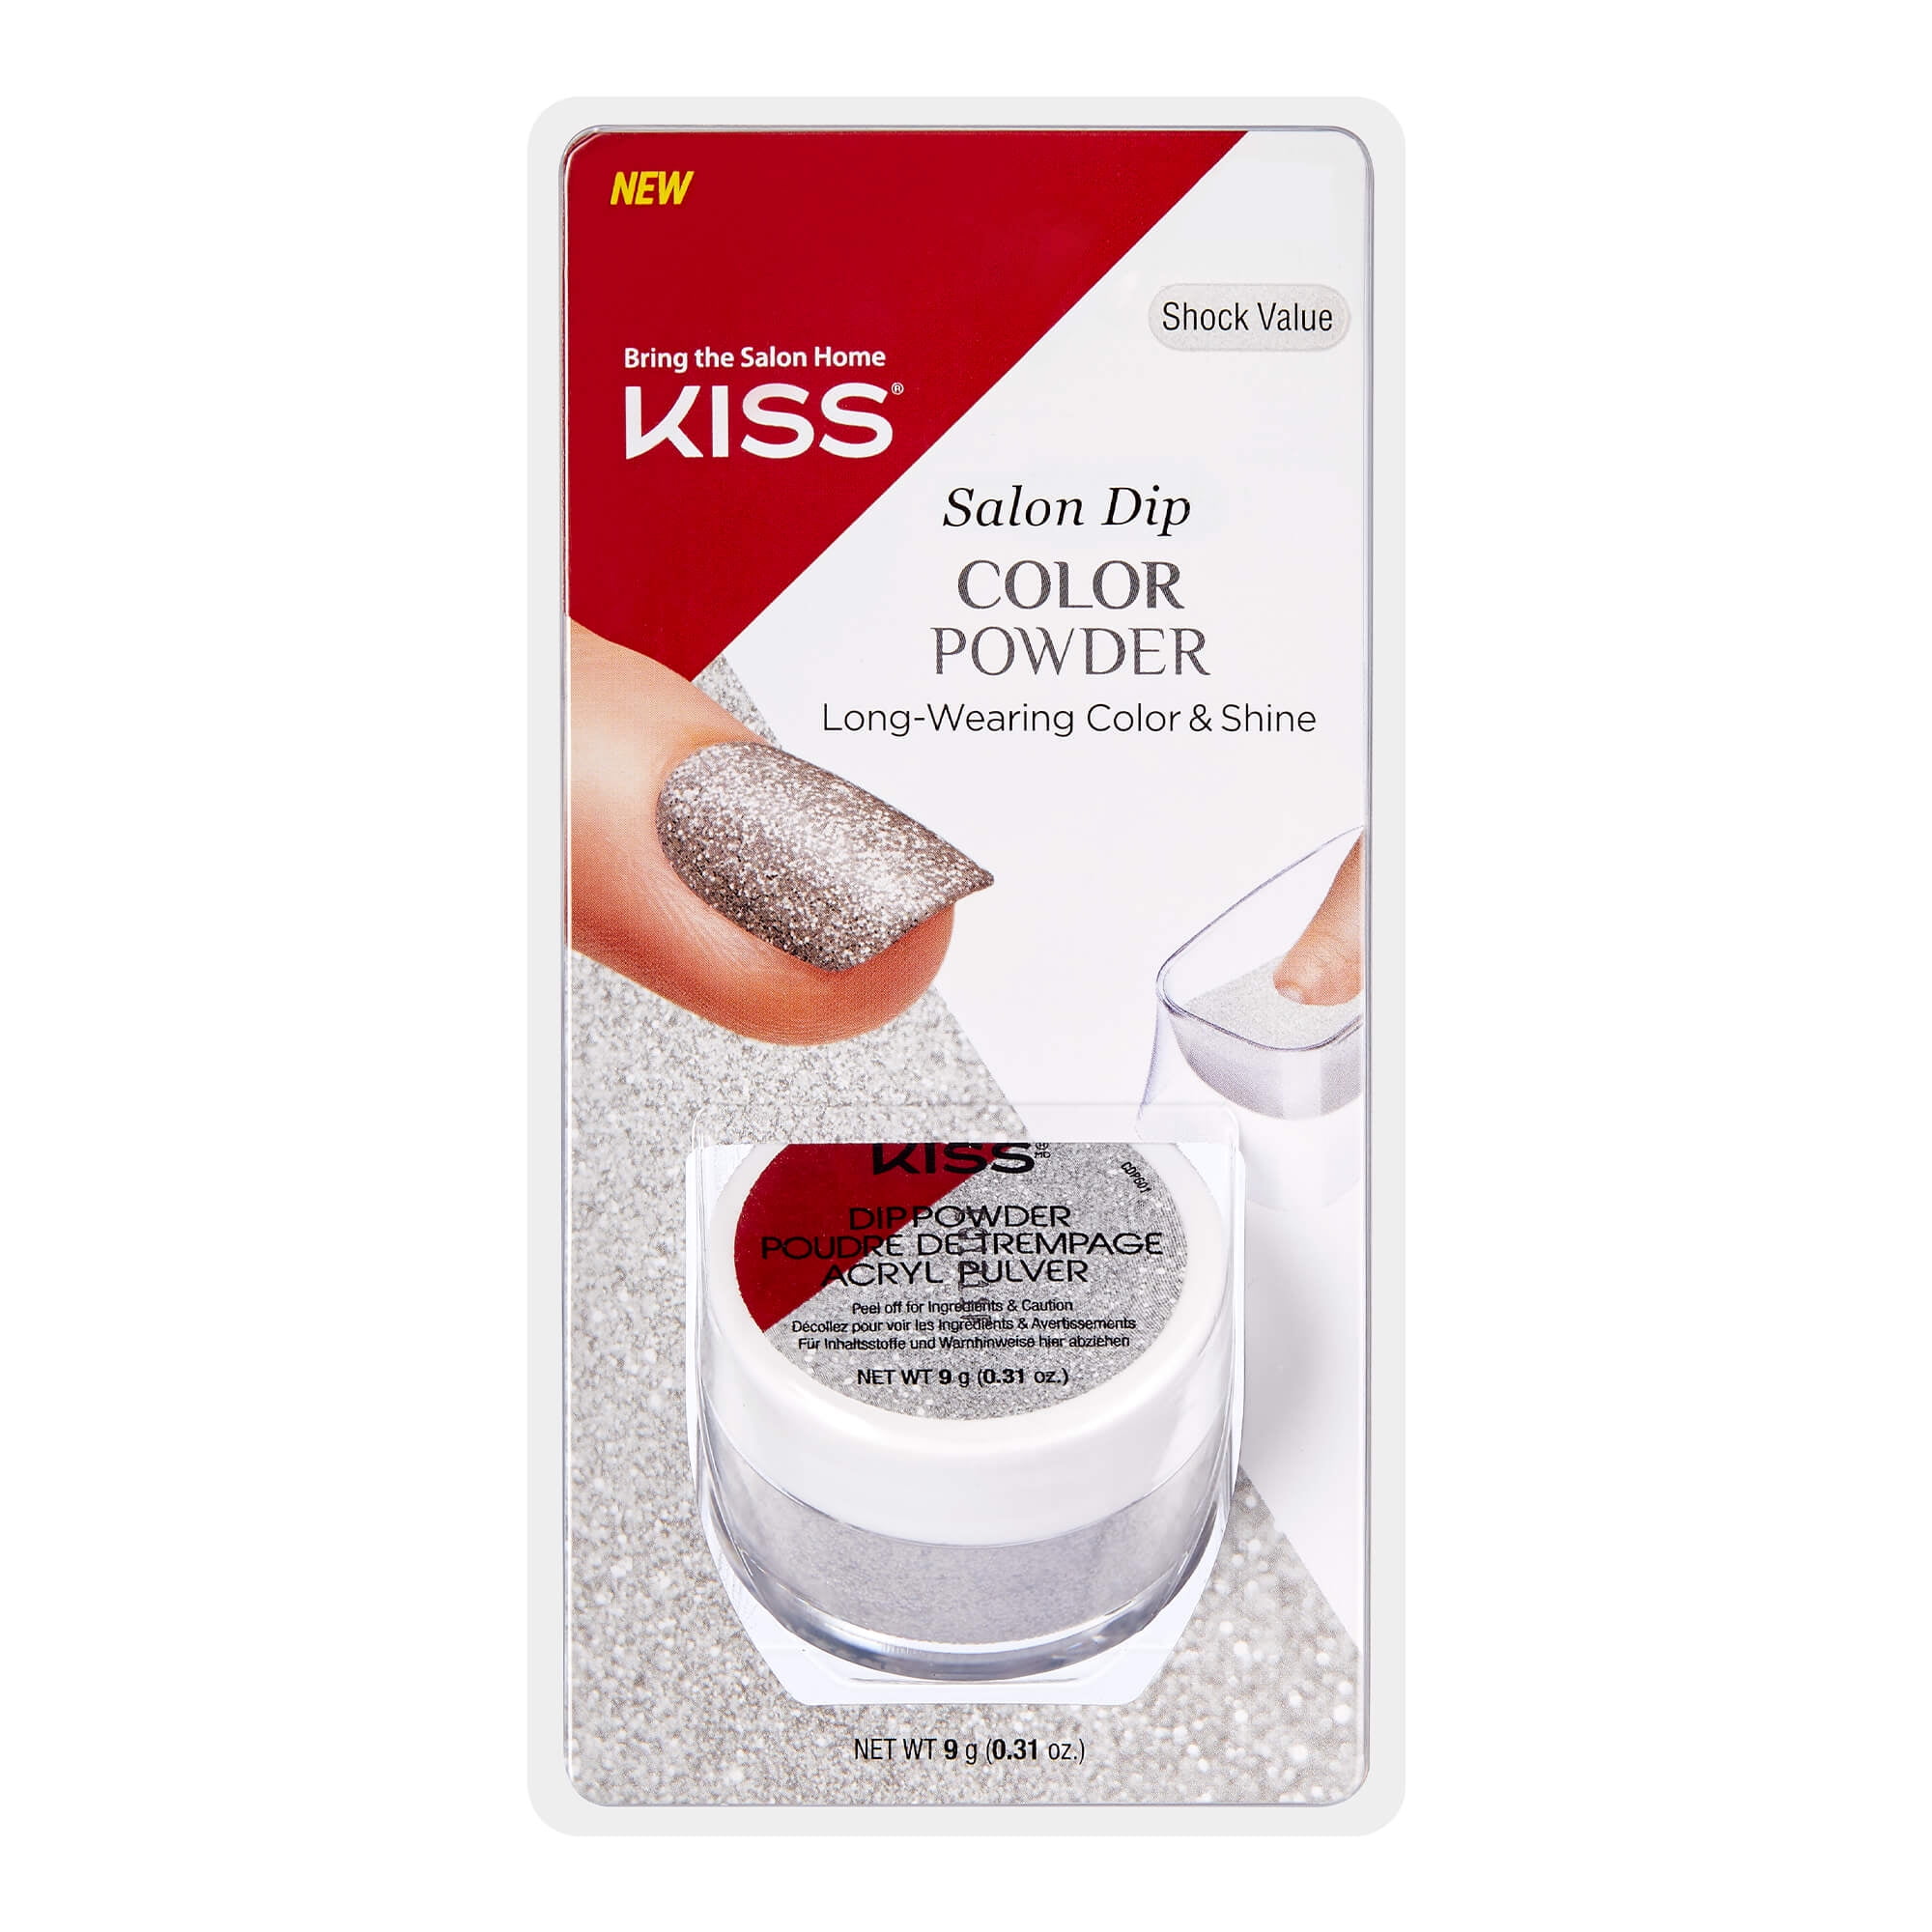 KISS Long Wearing Salon Dip Color Powder - Shock Value